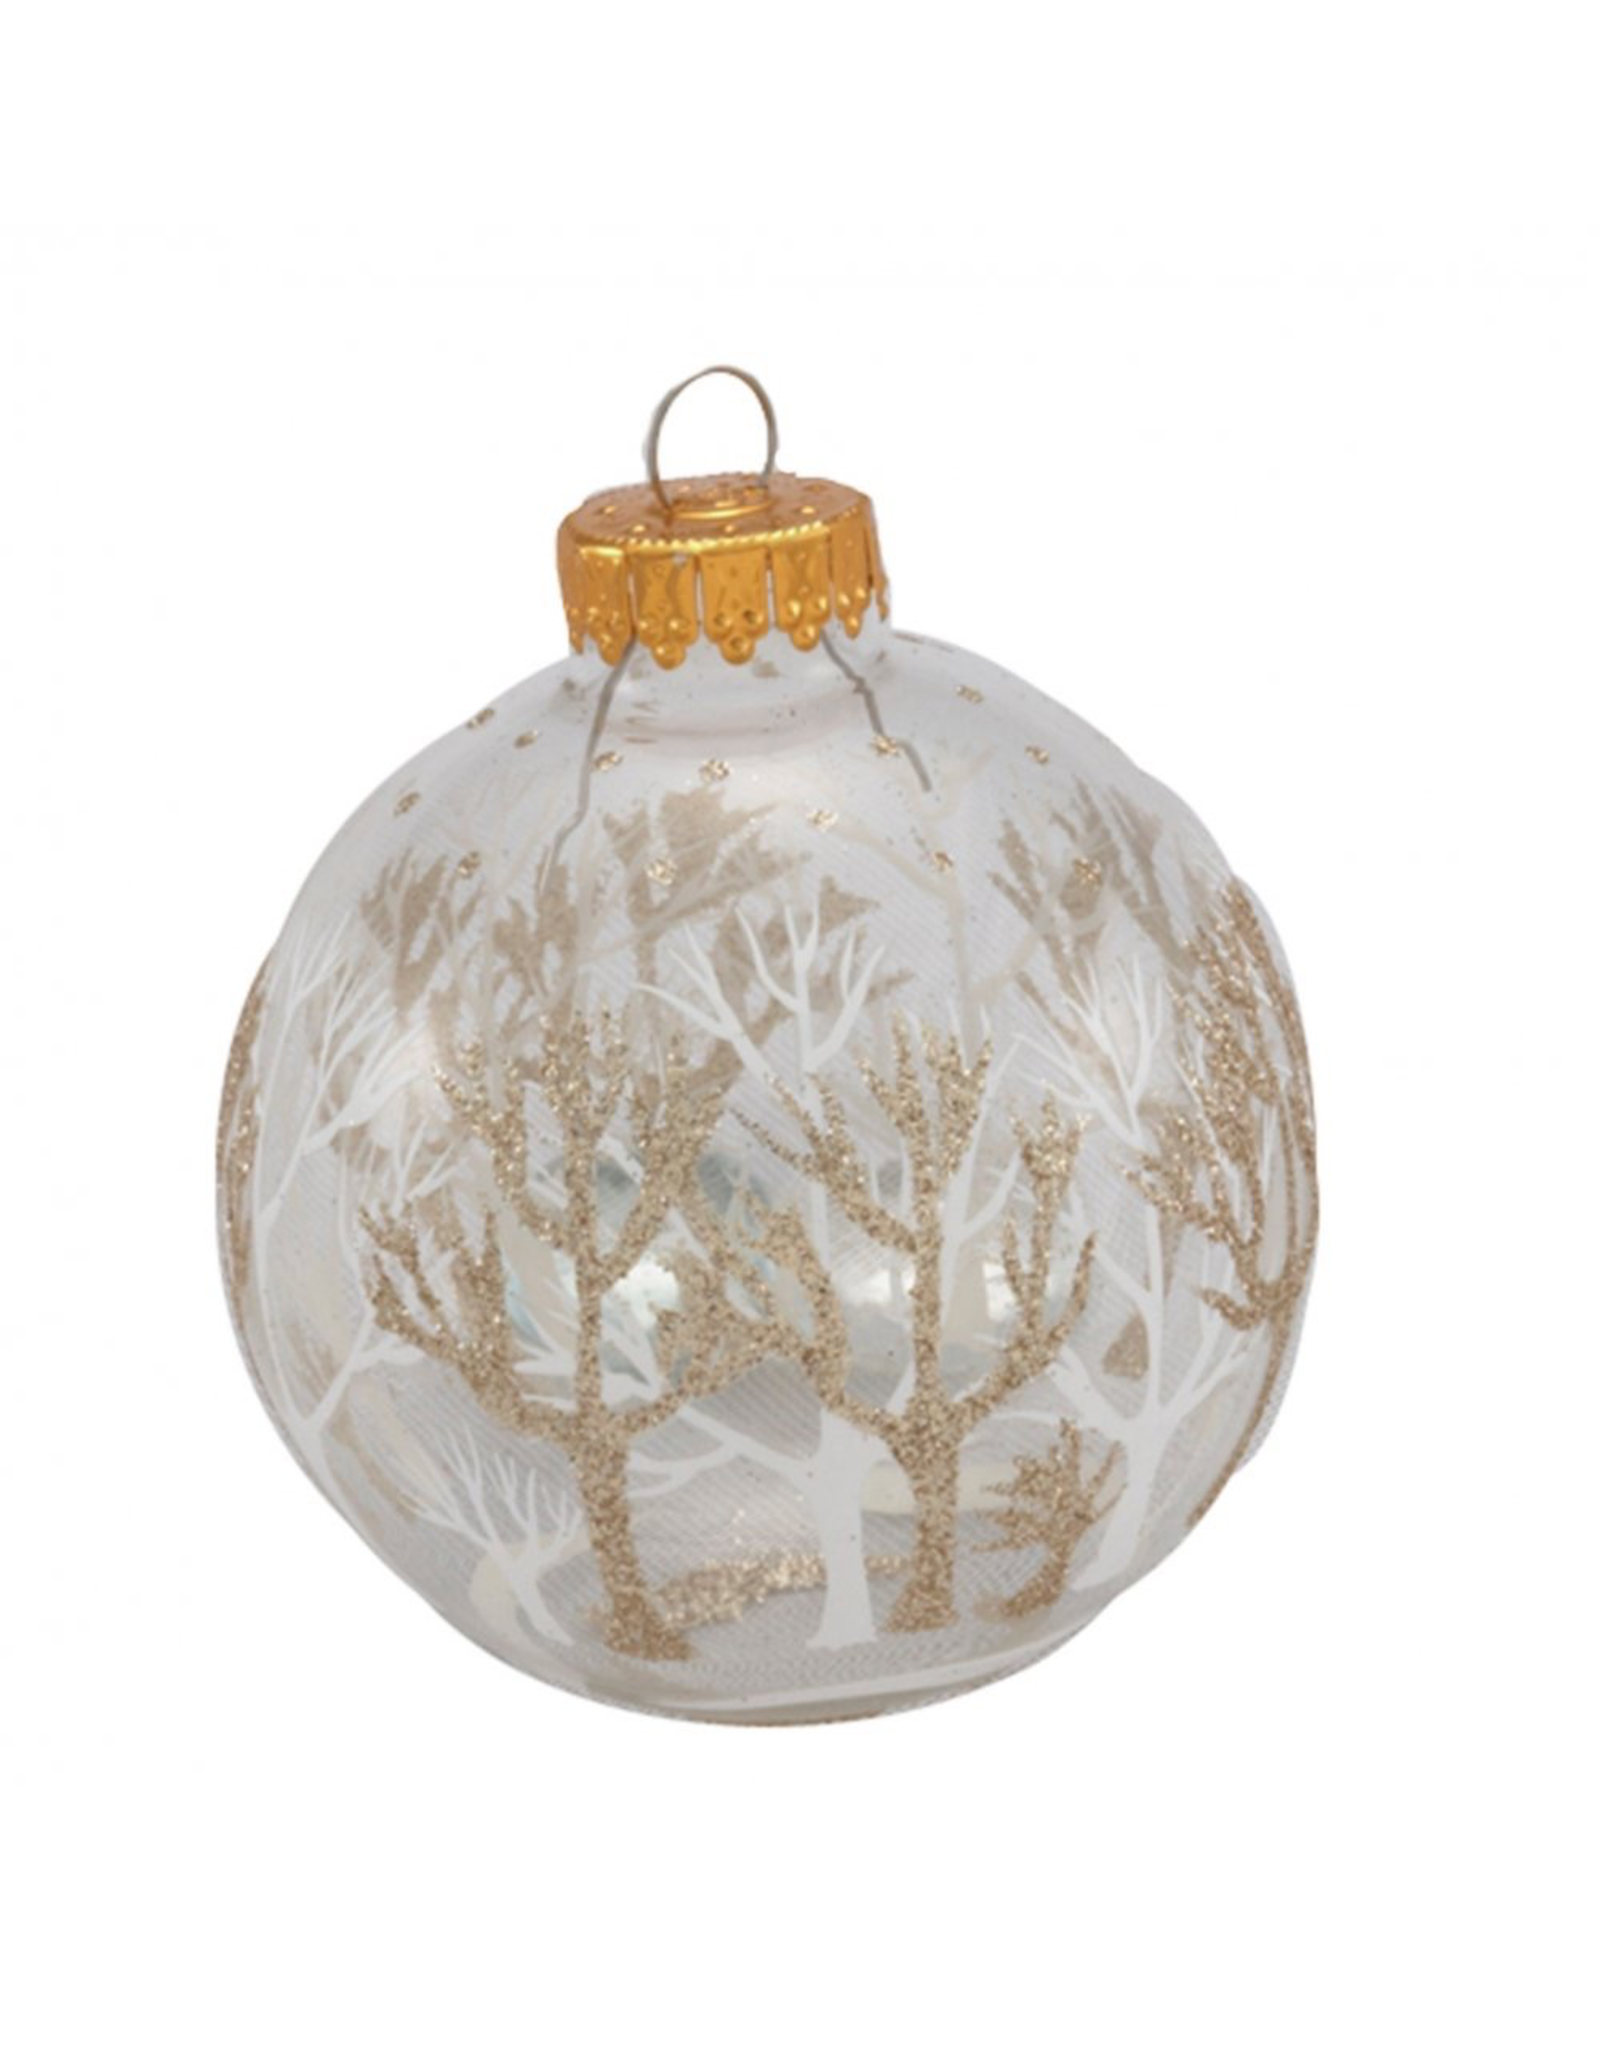 Kurt Adler Clear Glass Ball Ornaments W Tree Design 2.5 inch Set of 4